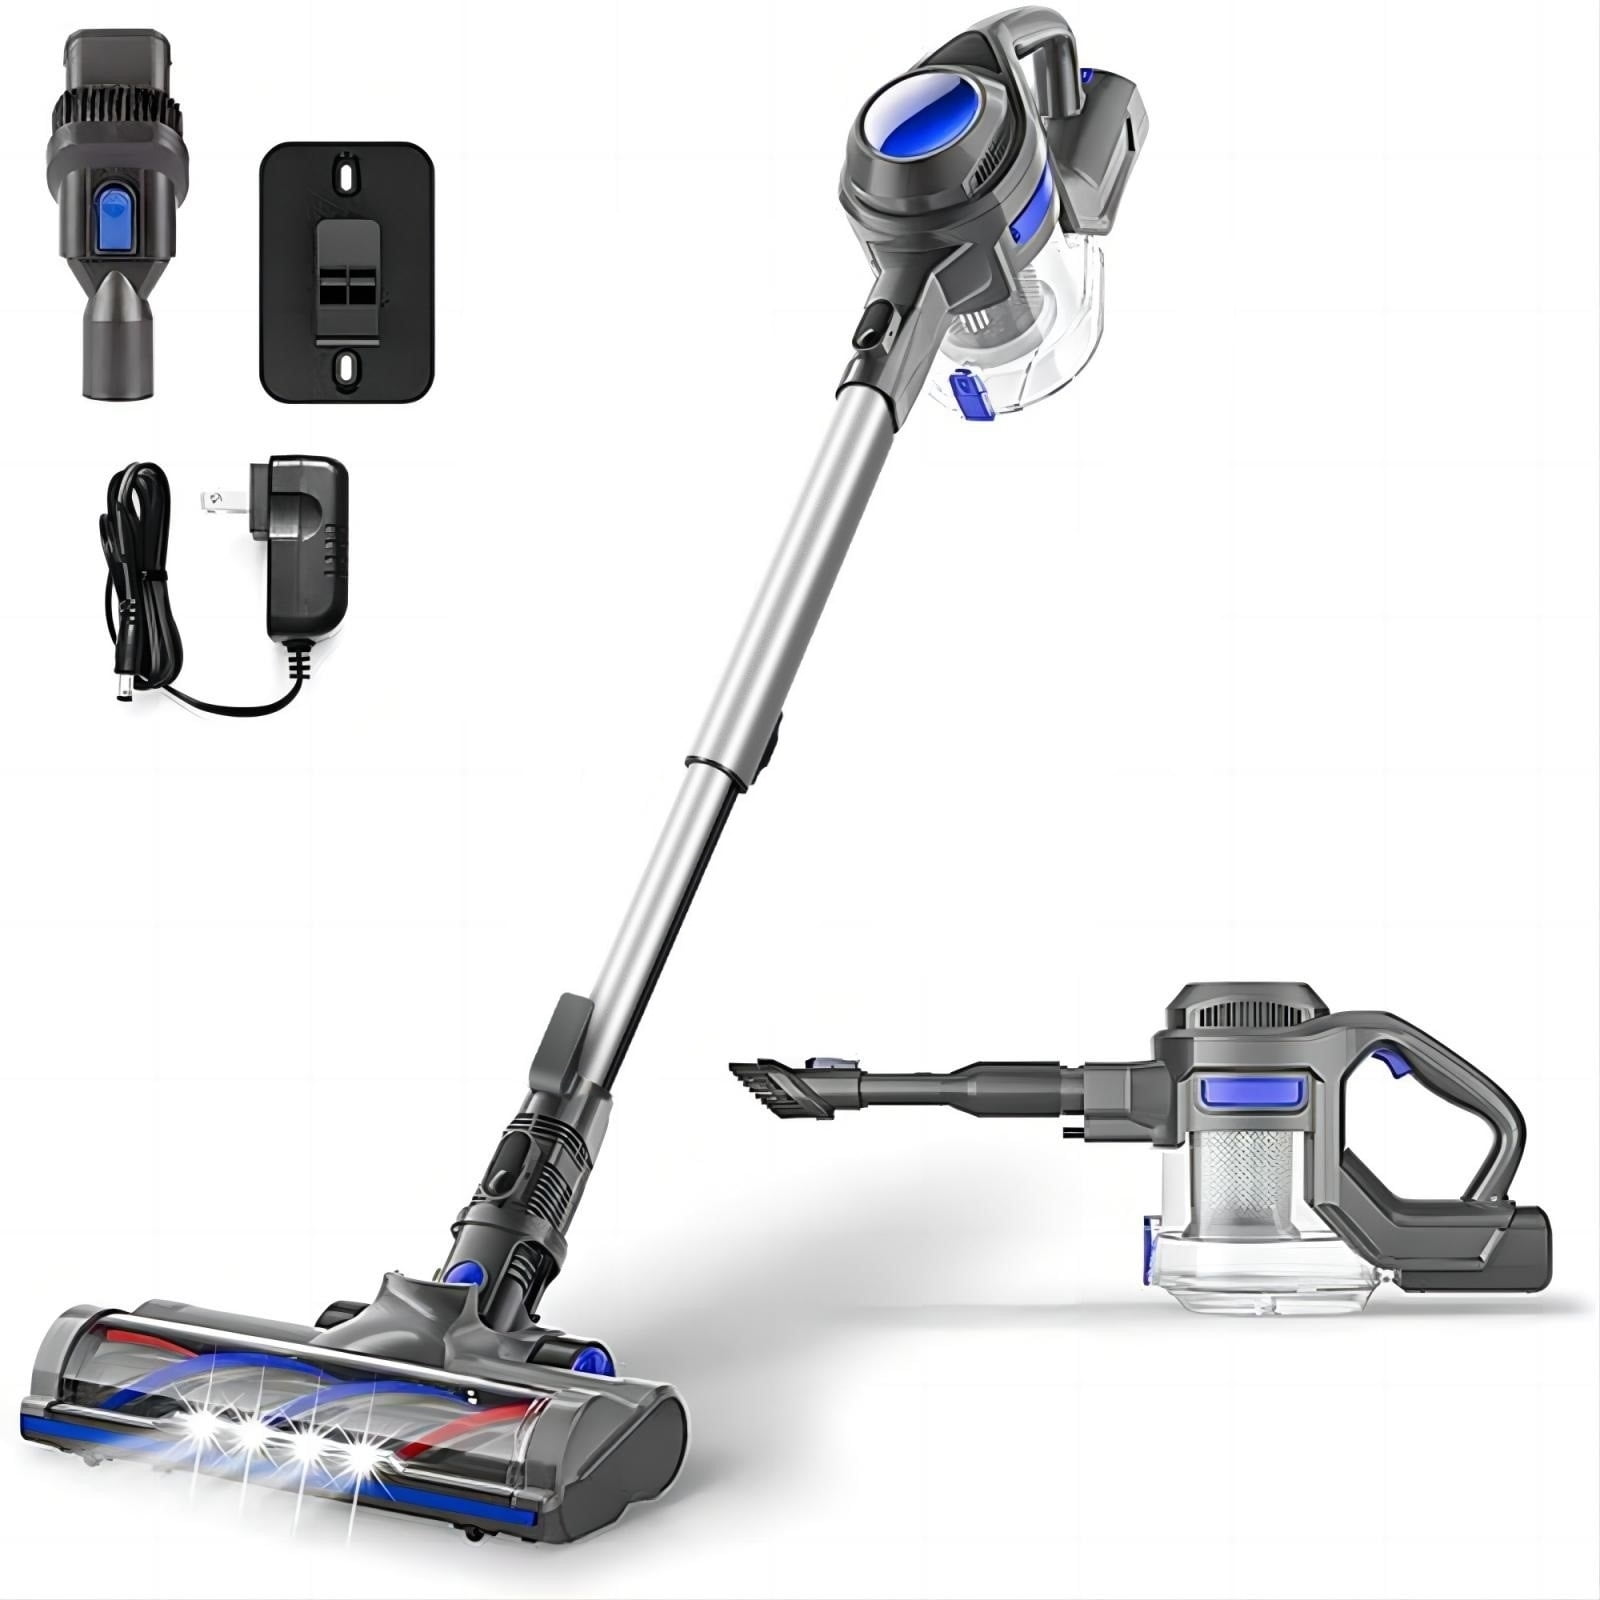 Moosoo Cordless Vacuum 4-in-1 Lightweight Stick Vacuum Cleaner, XL-618Pro